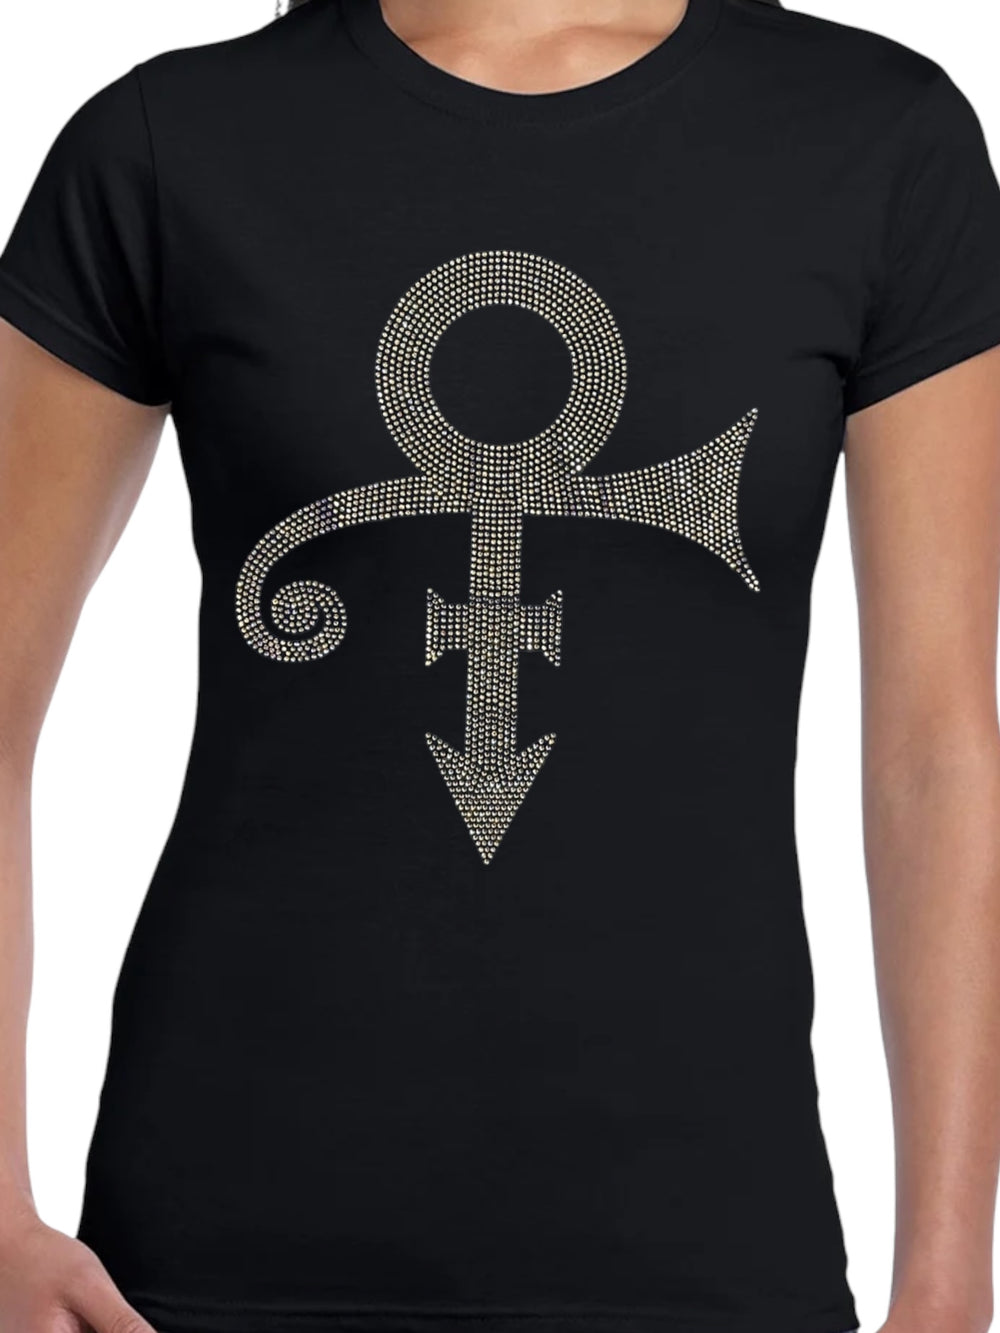 Prince – Official GOLD Love Symbol Diamante Ladies Slim Fit T-Shirt NEW